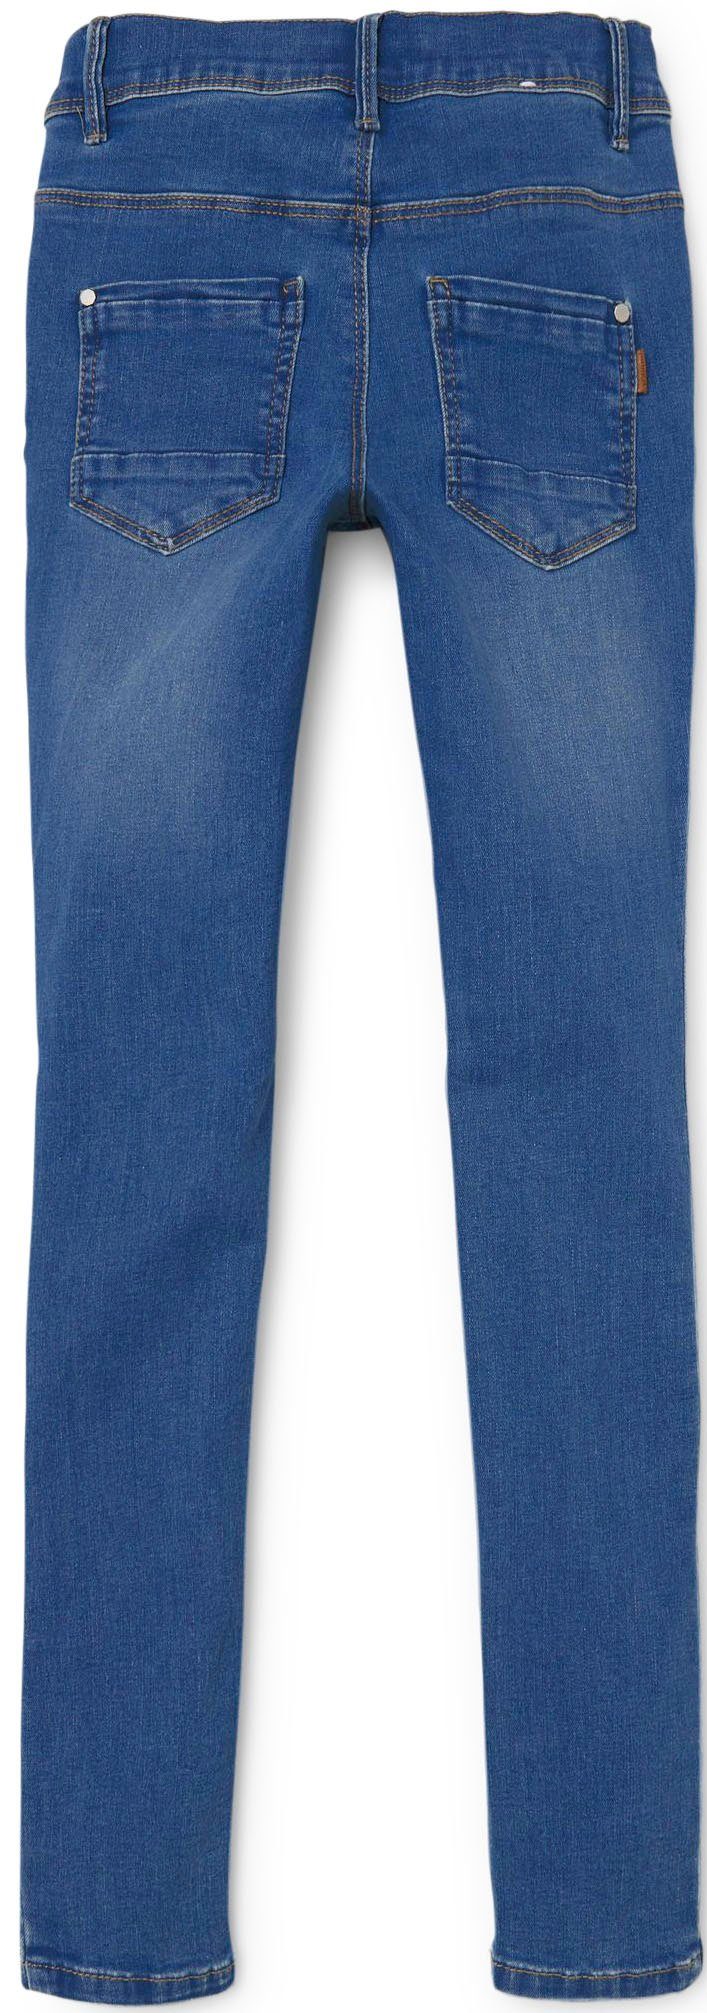 It Blau PANT Stretch-Jeans NKFPOLLY Name DNMATASI